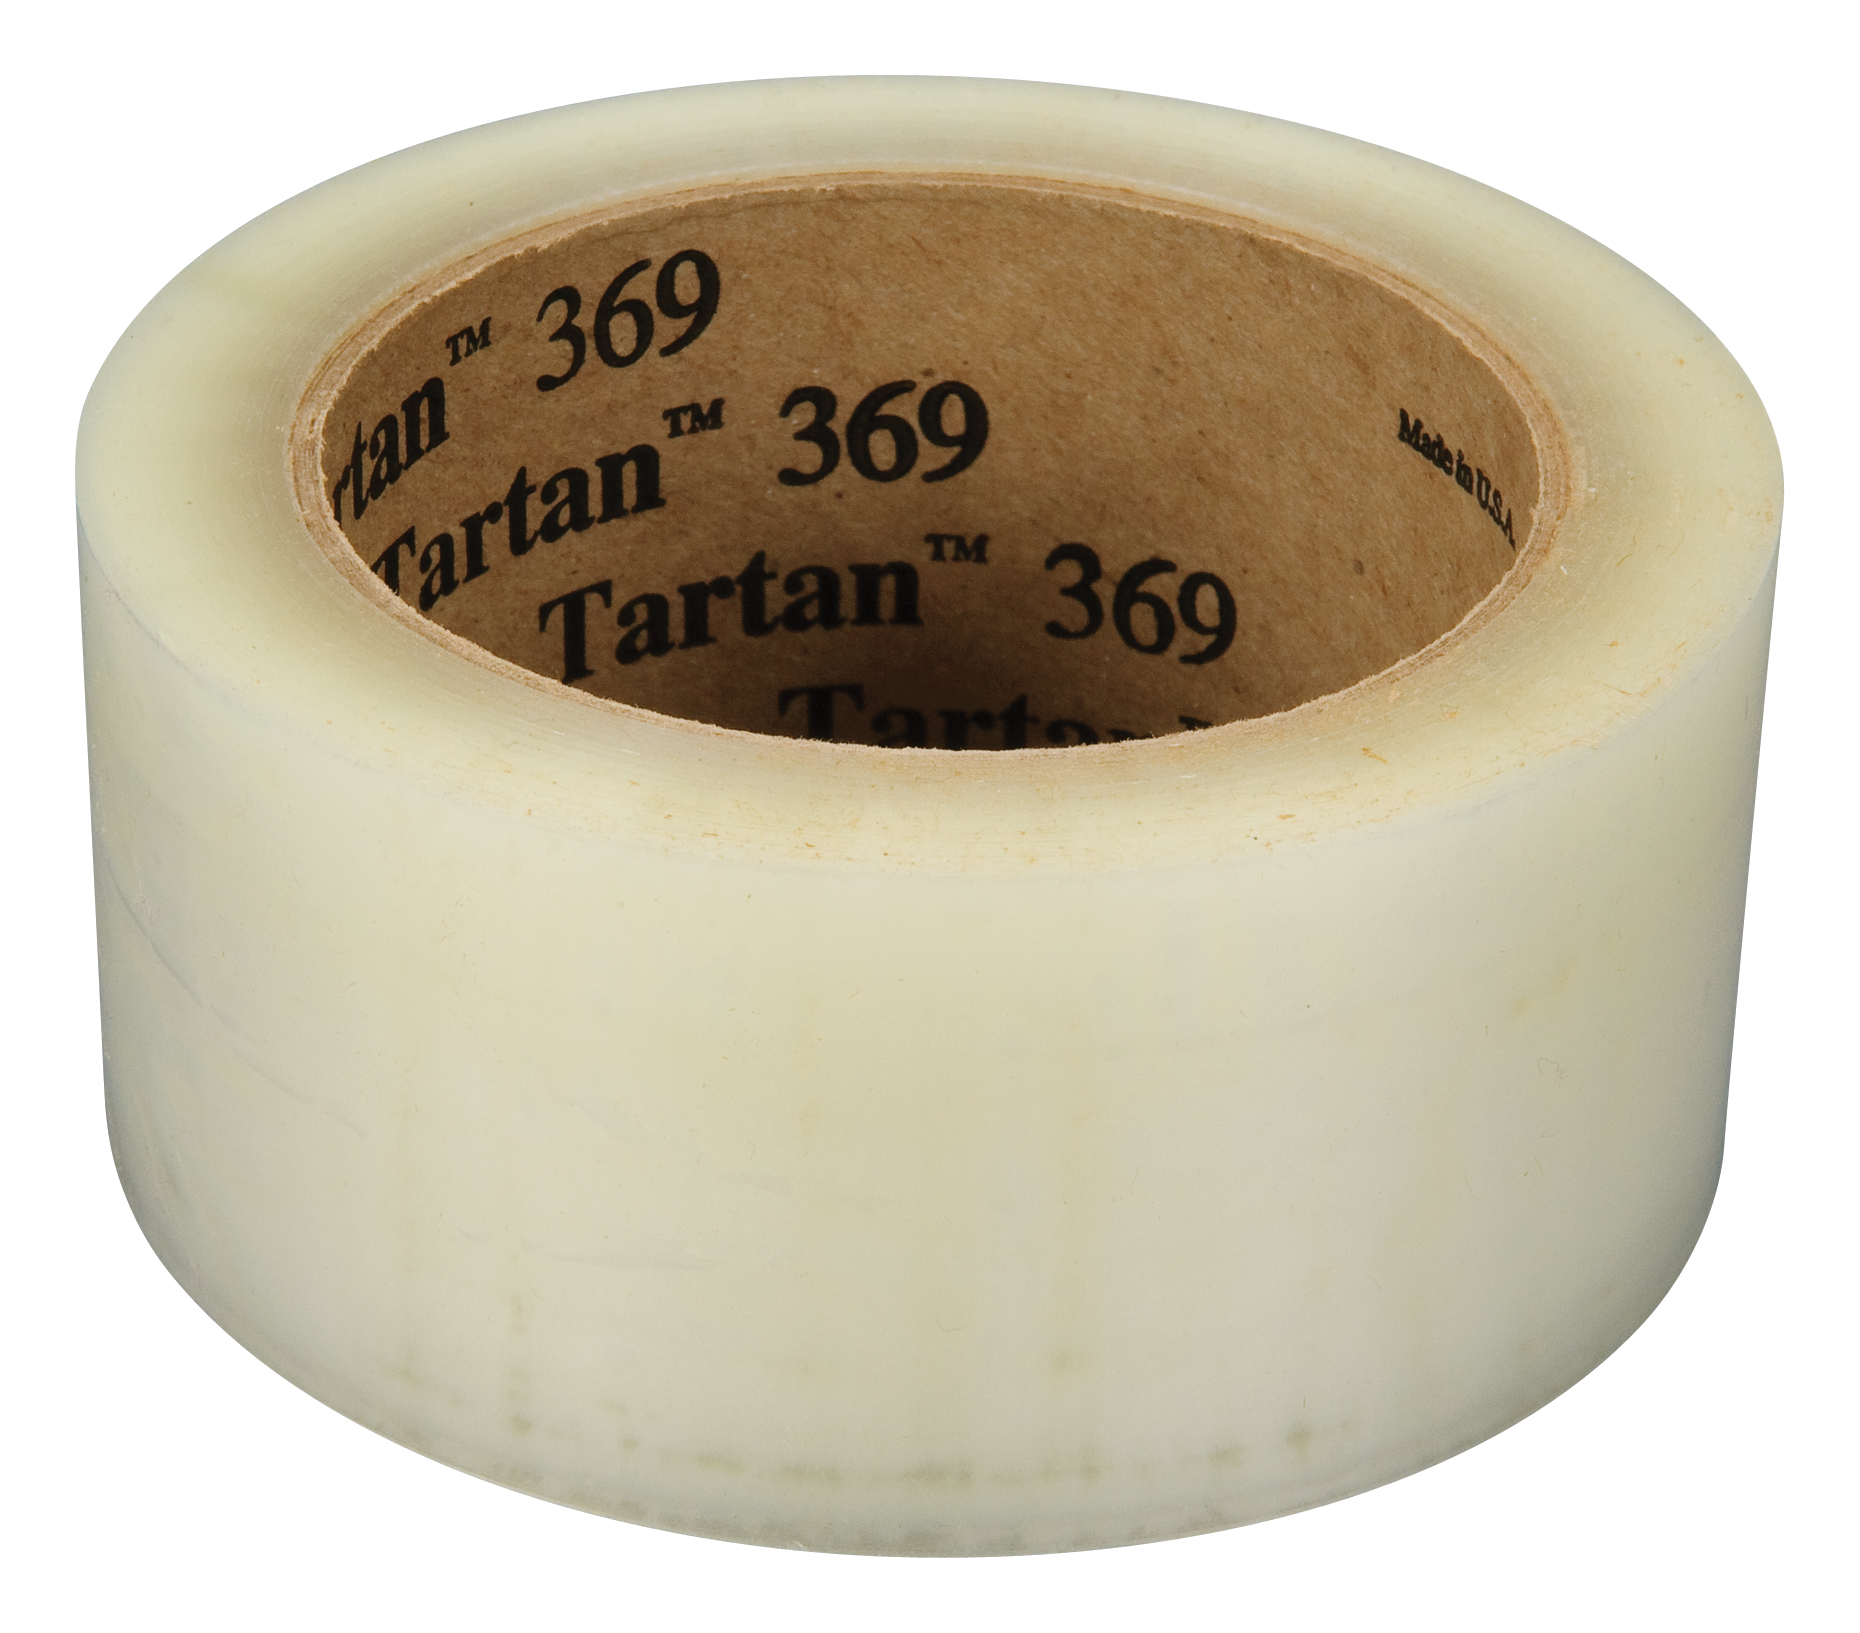 Intertape 513 - Utility Grade Paper Masking Tape - Natural Color